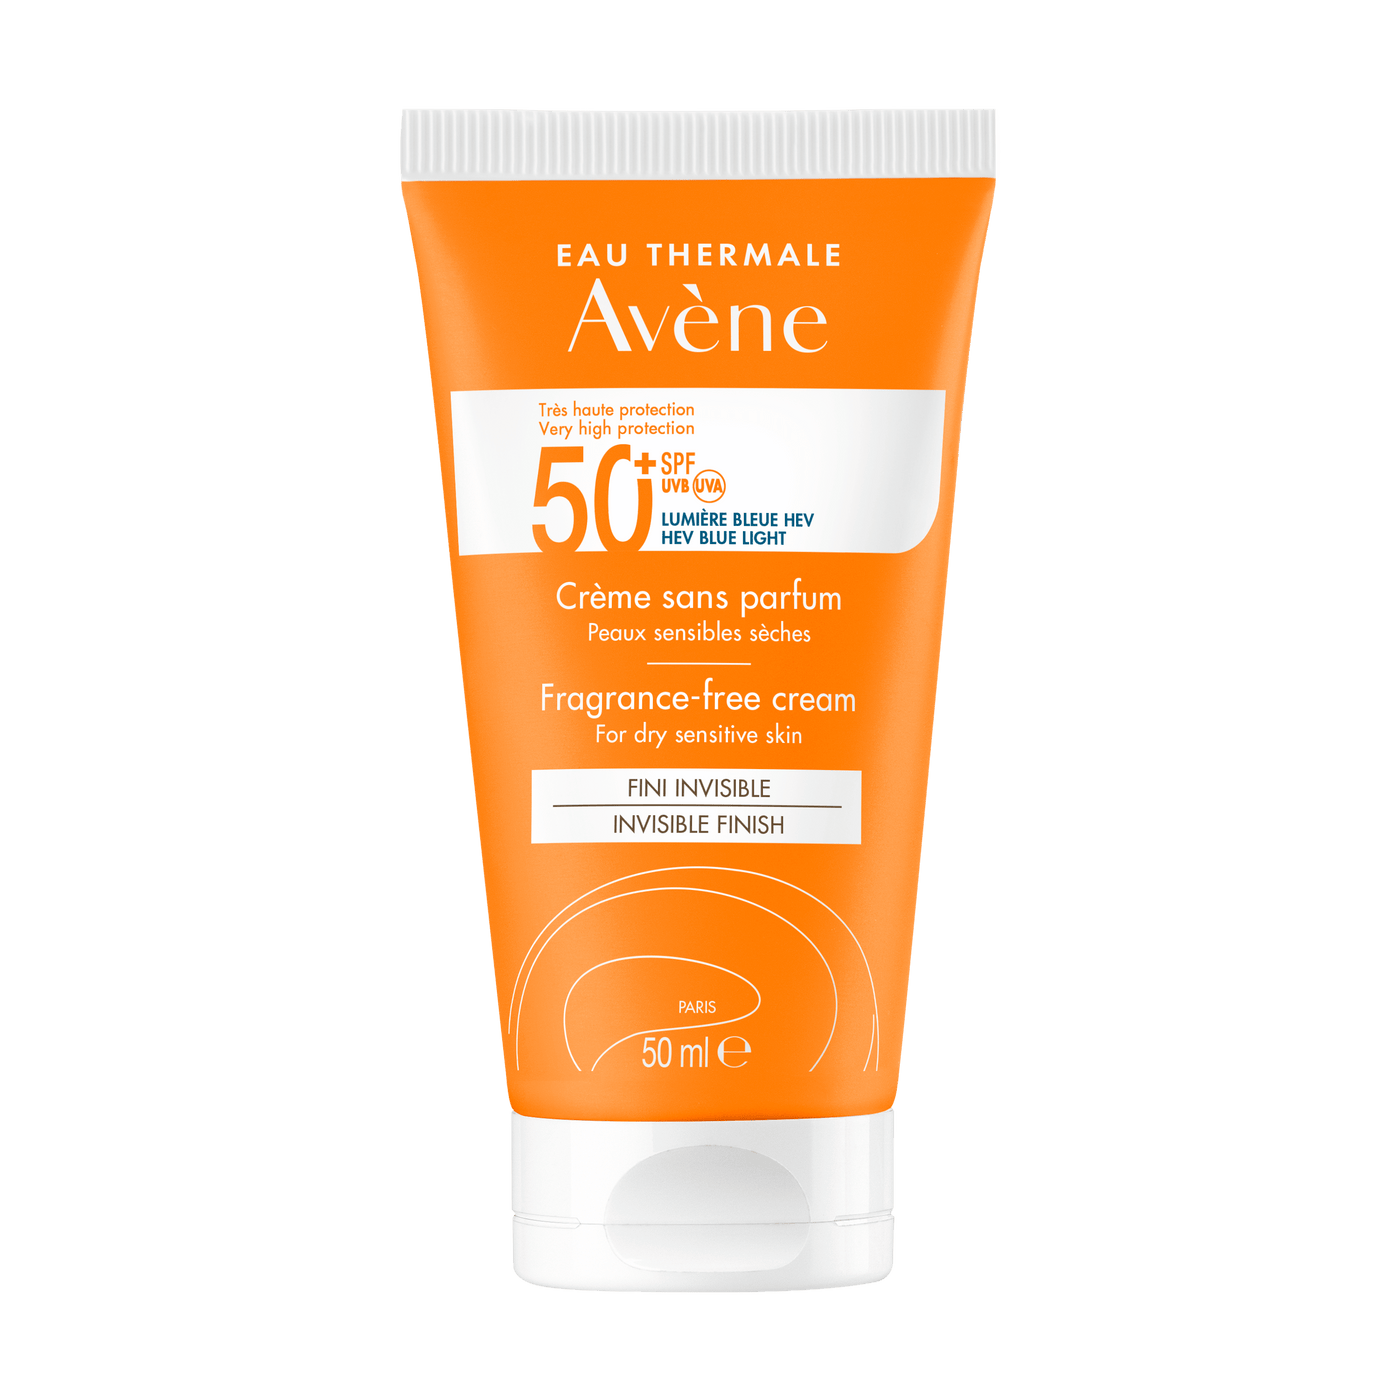 50 + spf, Avene, Eau thermale, invisible finish, sensible skin, fragrance-free, sun protection